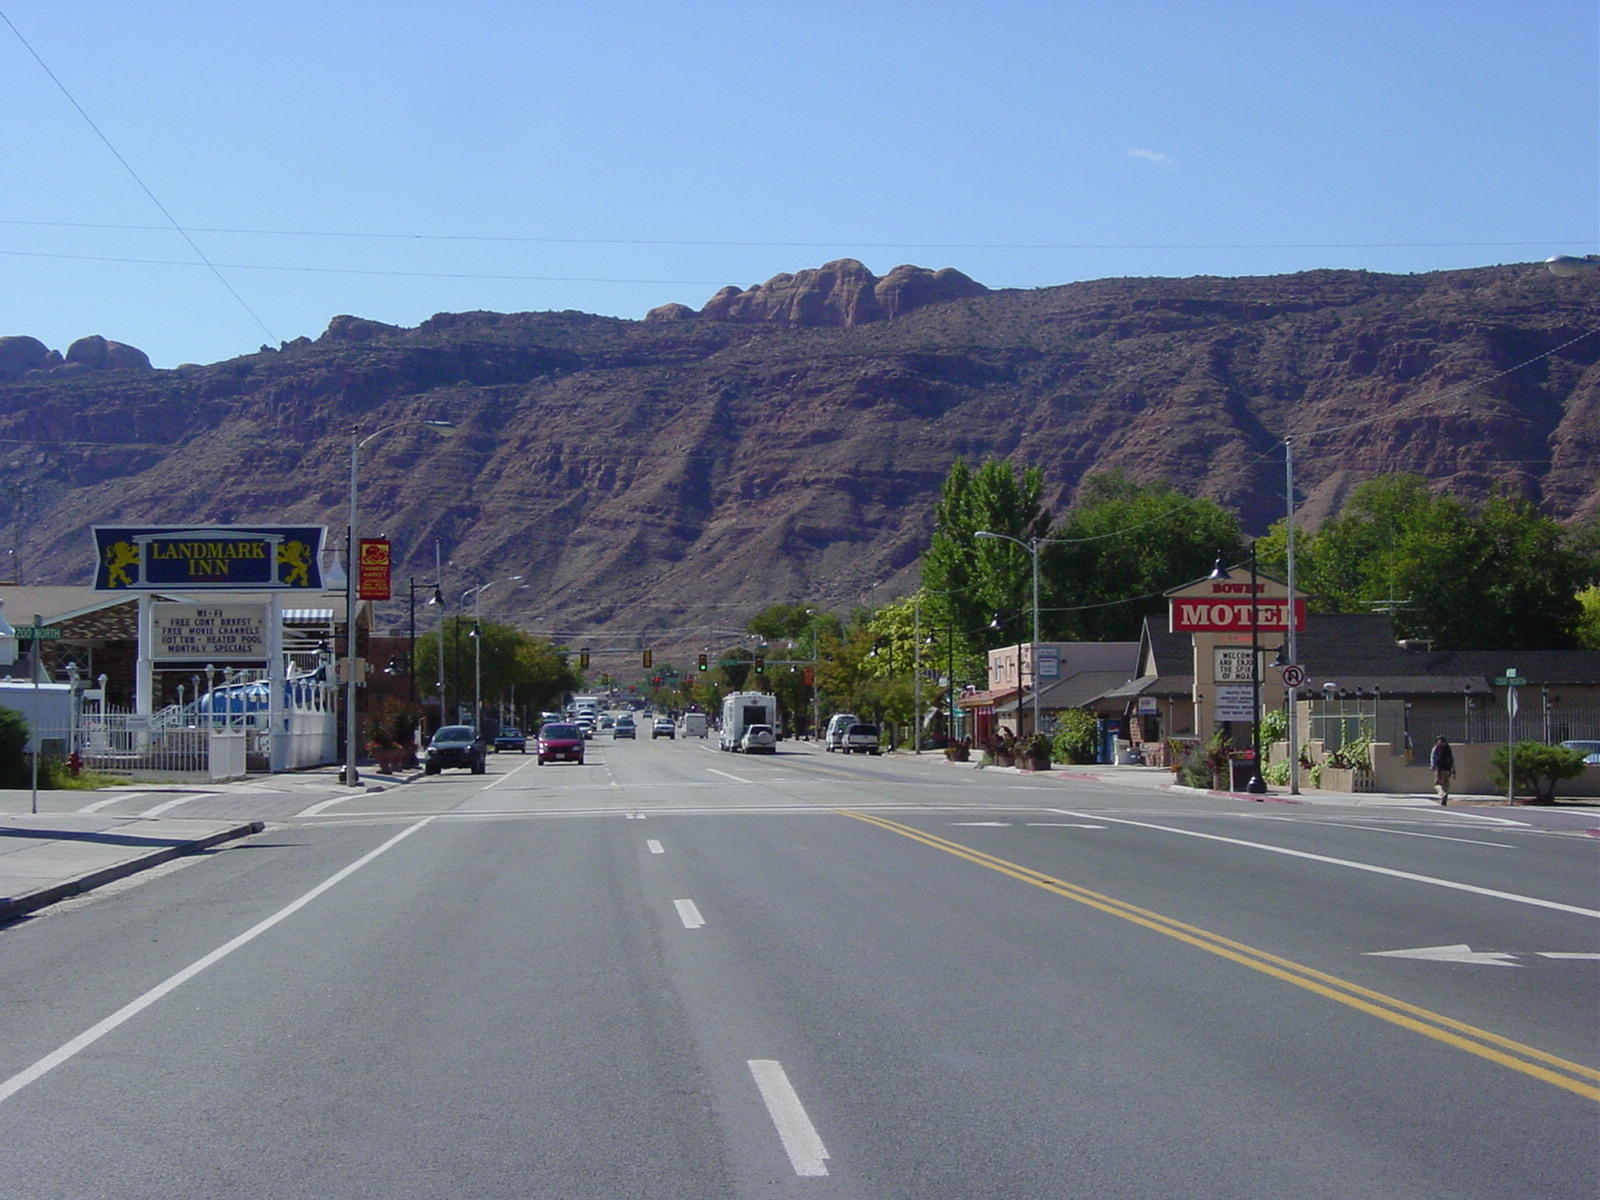 Looking south down main street through Moab,Utah